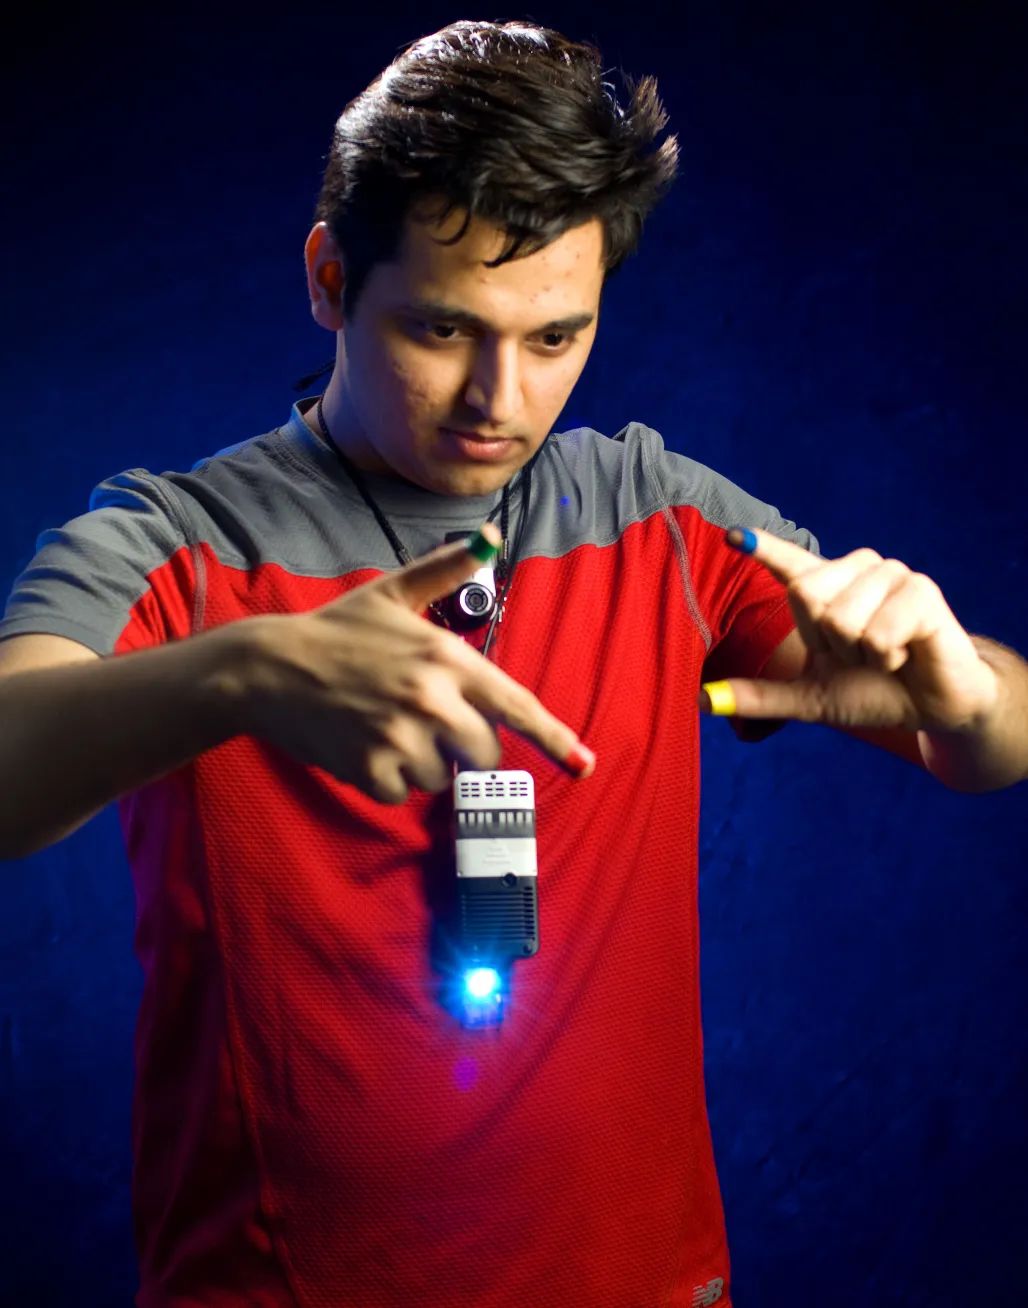 2012 年，Pranav Mistry 佩戴了一个类似的设备，他与Maes和Chang将其命名为“WUW”，为“Wear yoUr World”